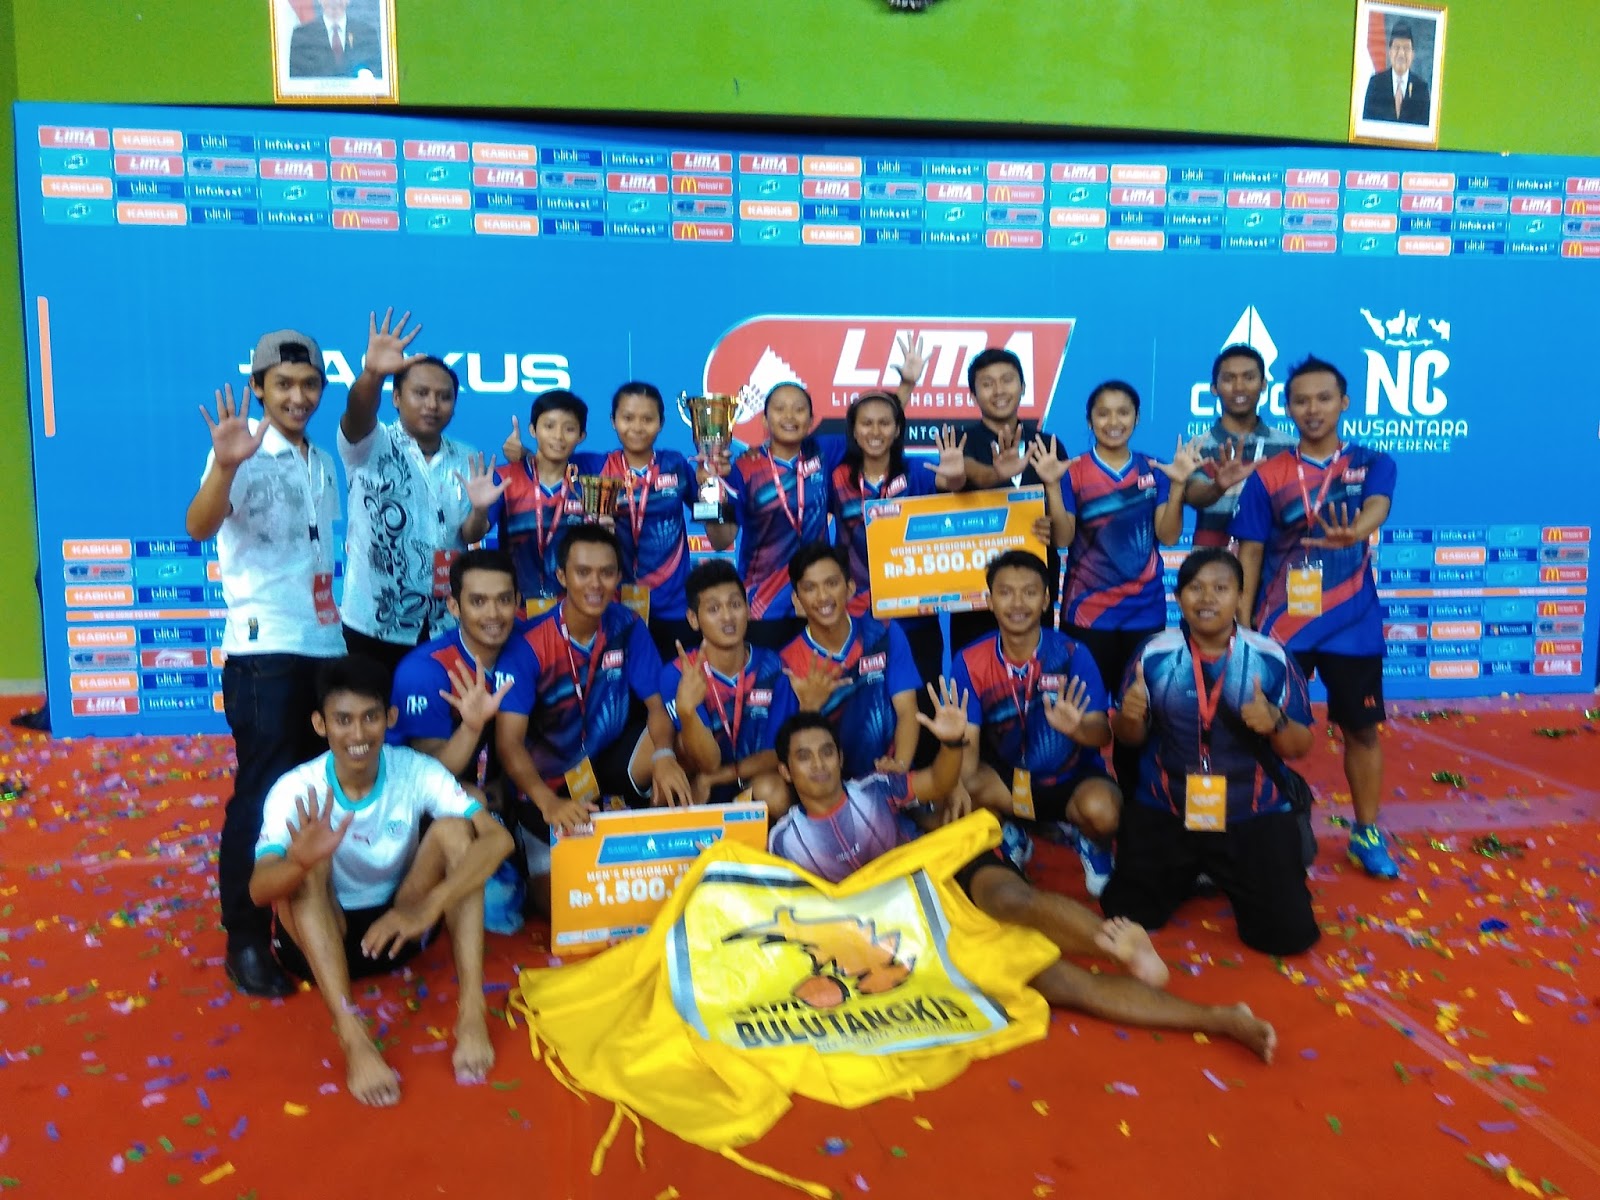 Foto LIMA Badminton Kaskus Central Java Yogyakarta Conference & Nusantara Conference 2015